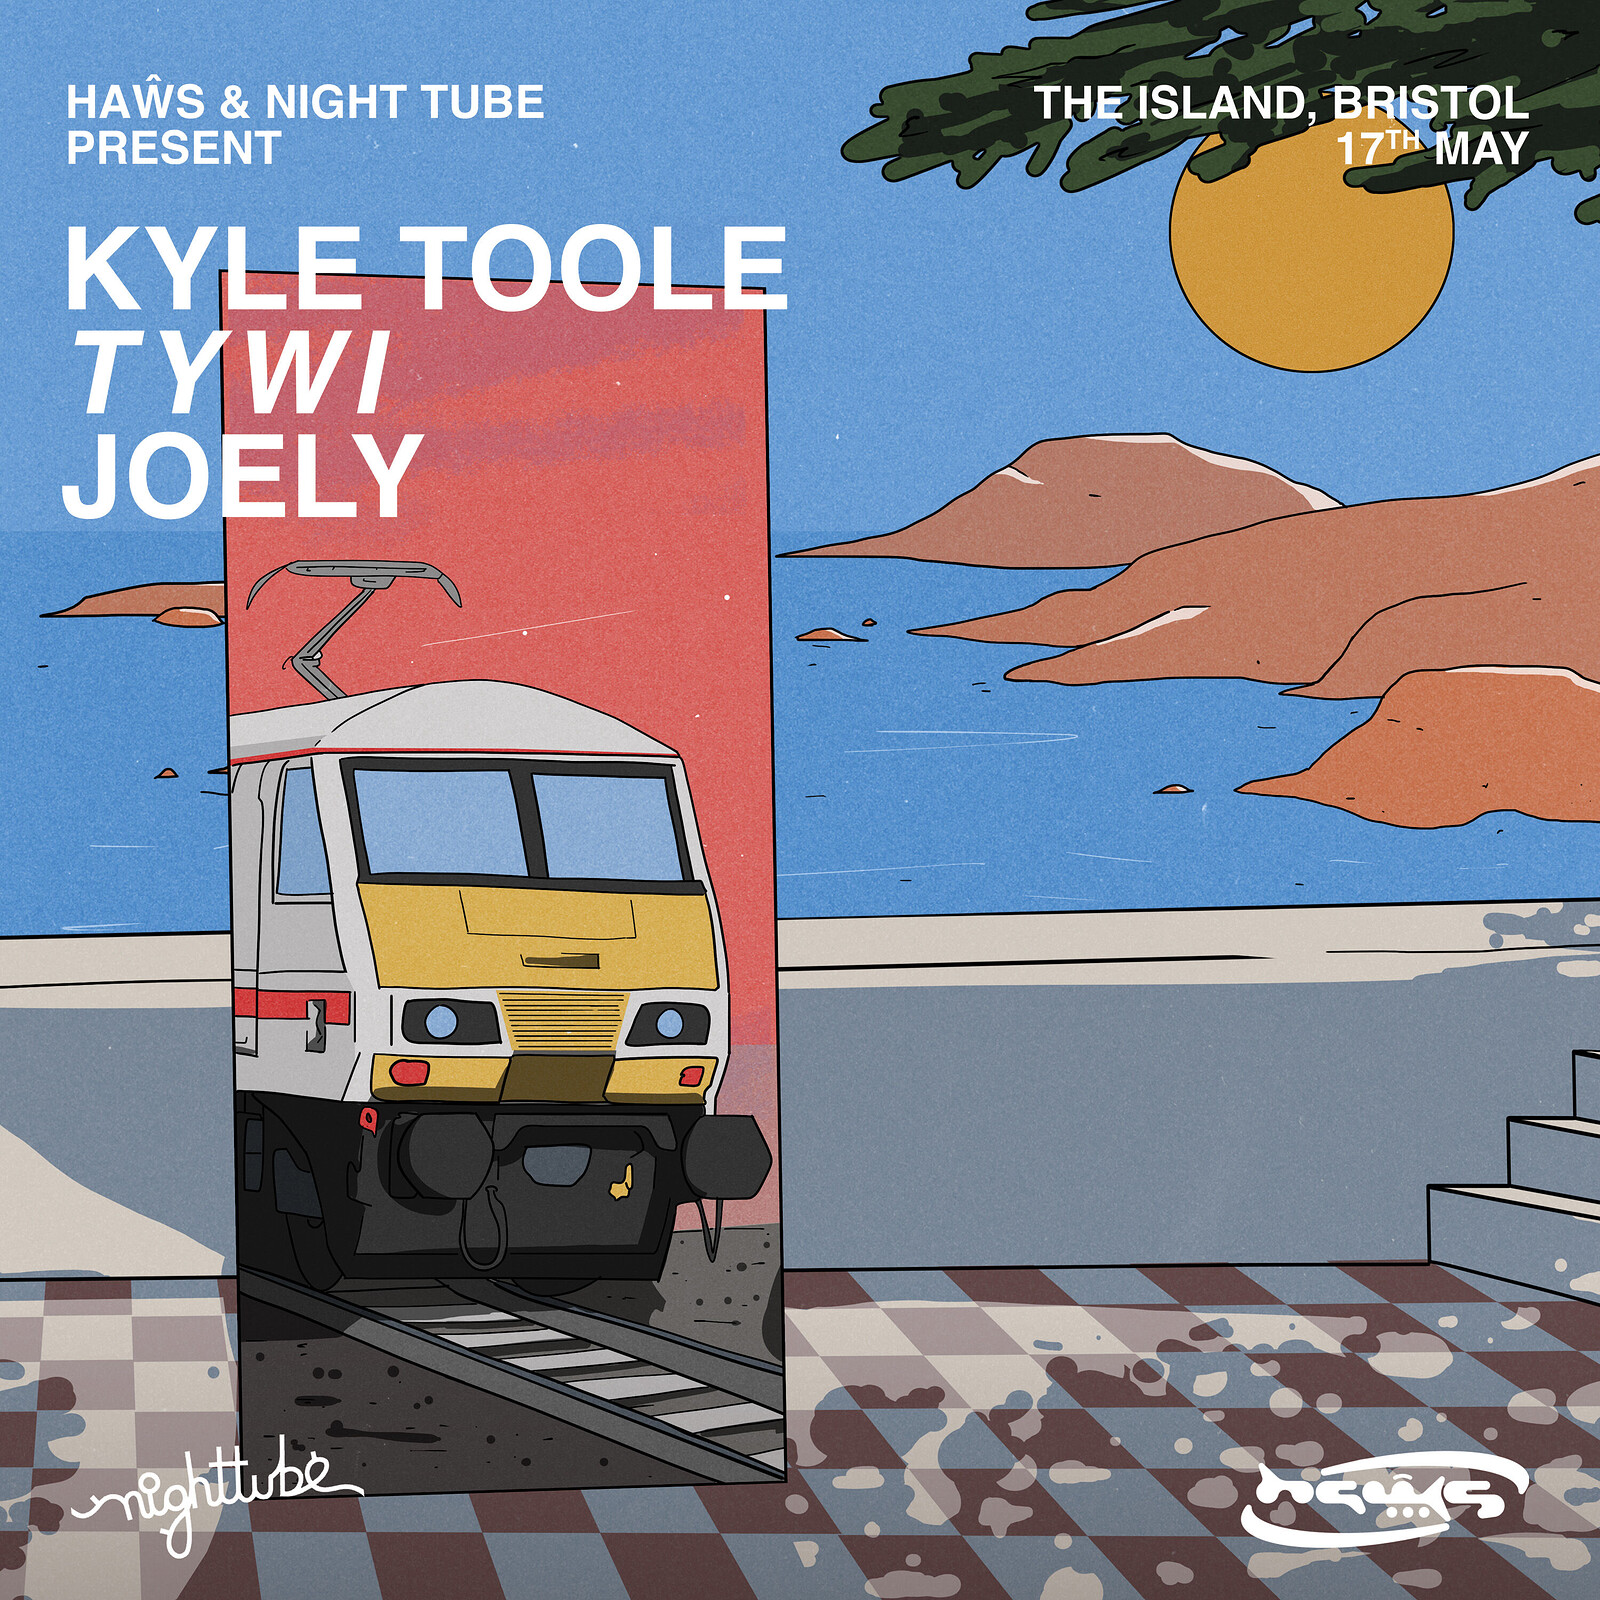 Night Tube x Haŵs: Kyle Toole, Tywi & Joely at The Island